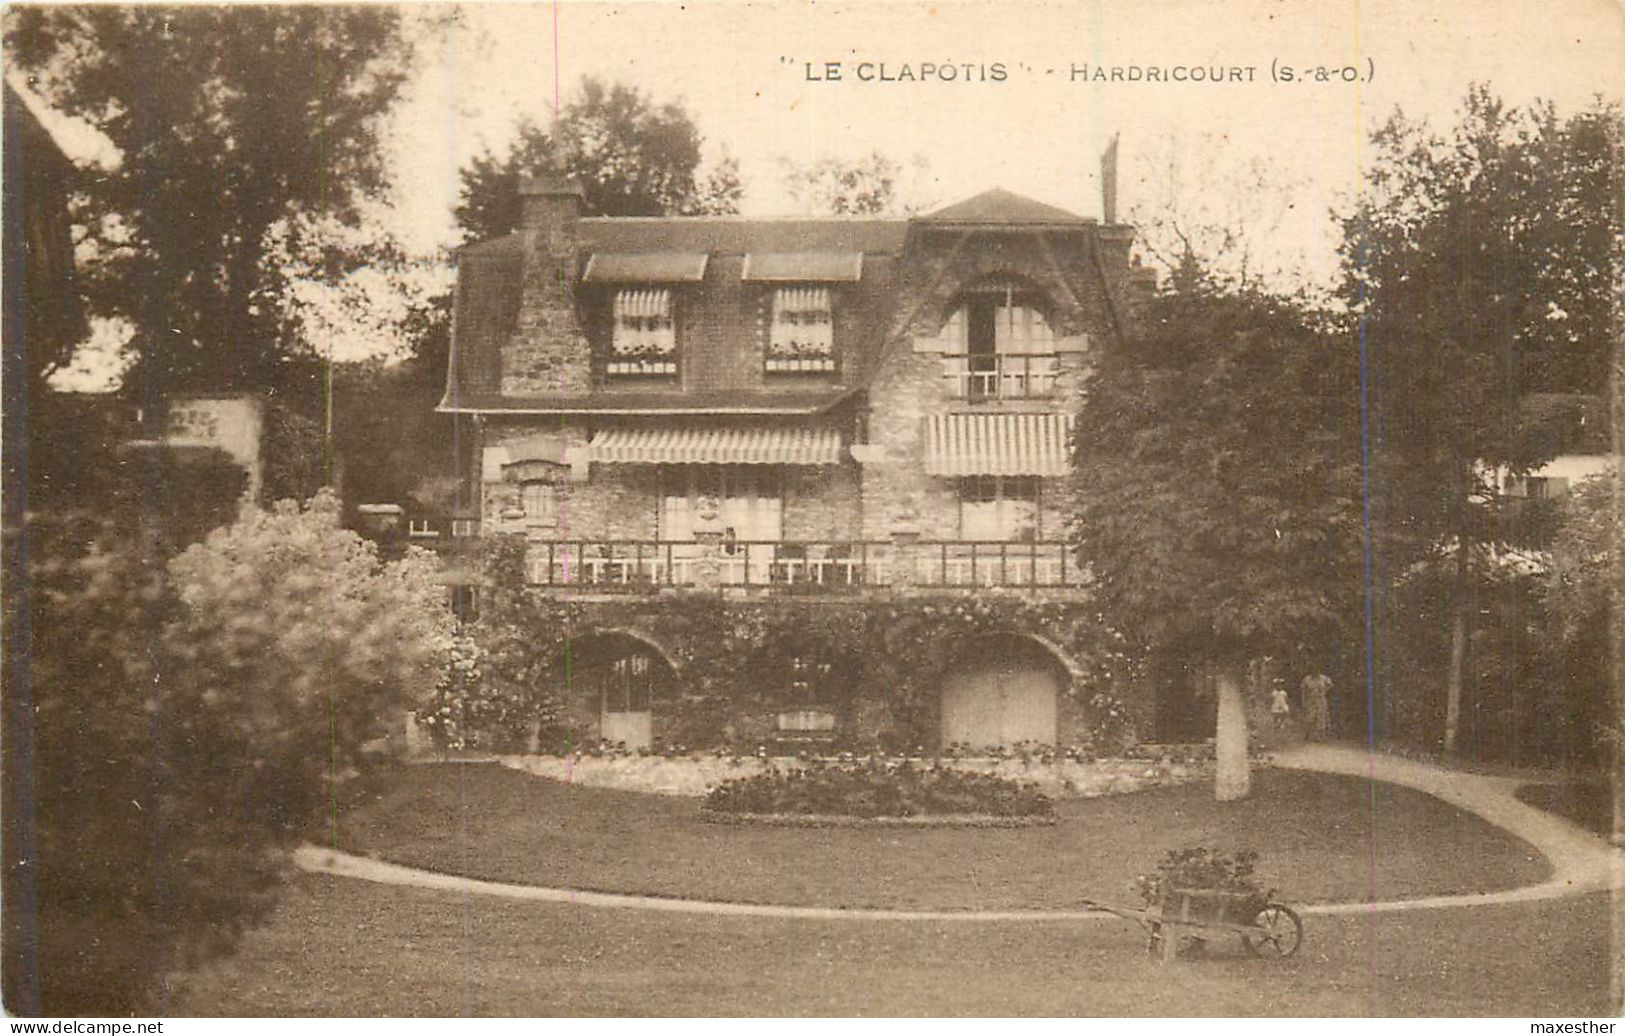 HARDRICOURT Le Clapotis - Hardricourt